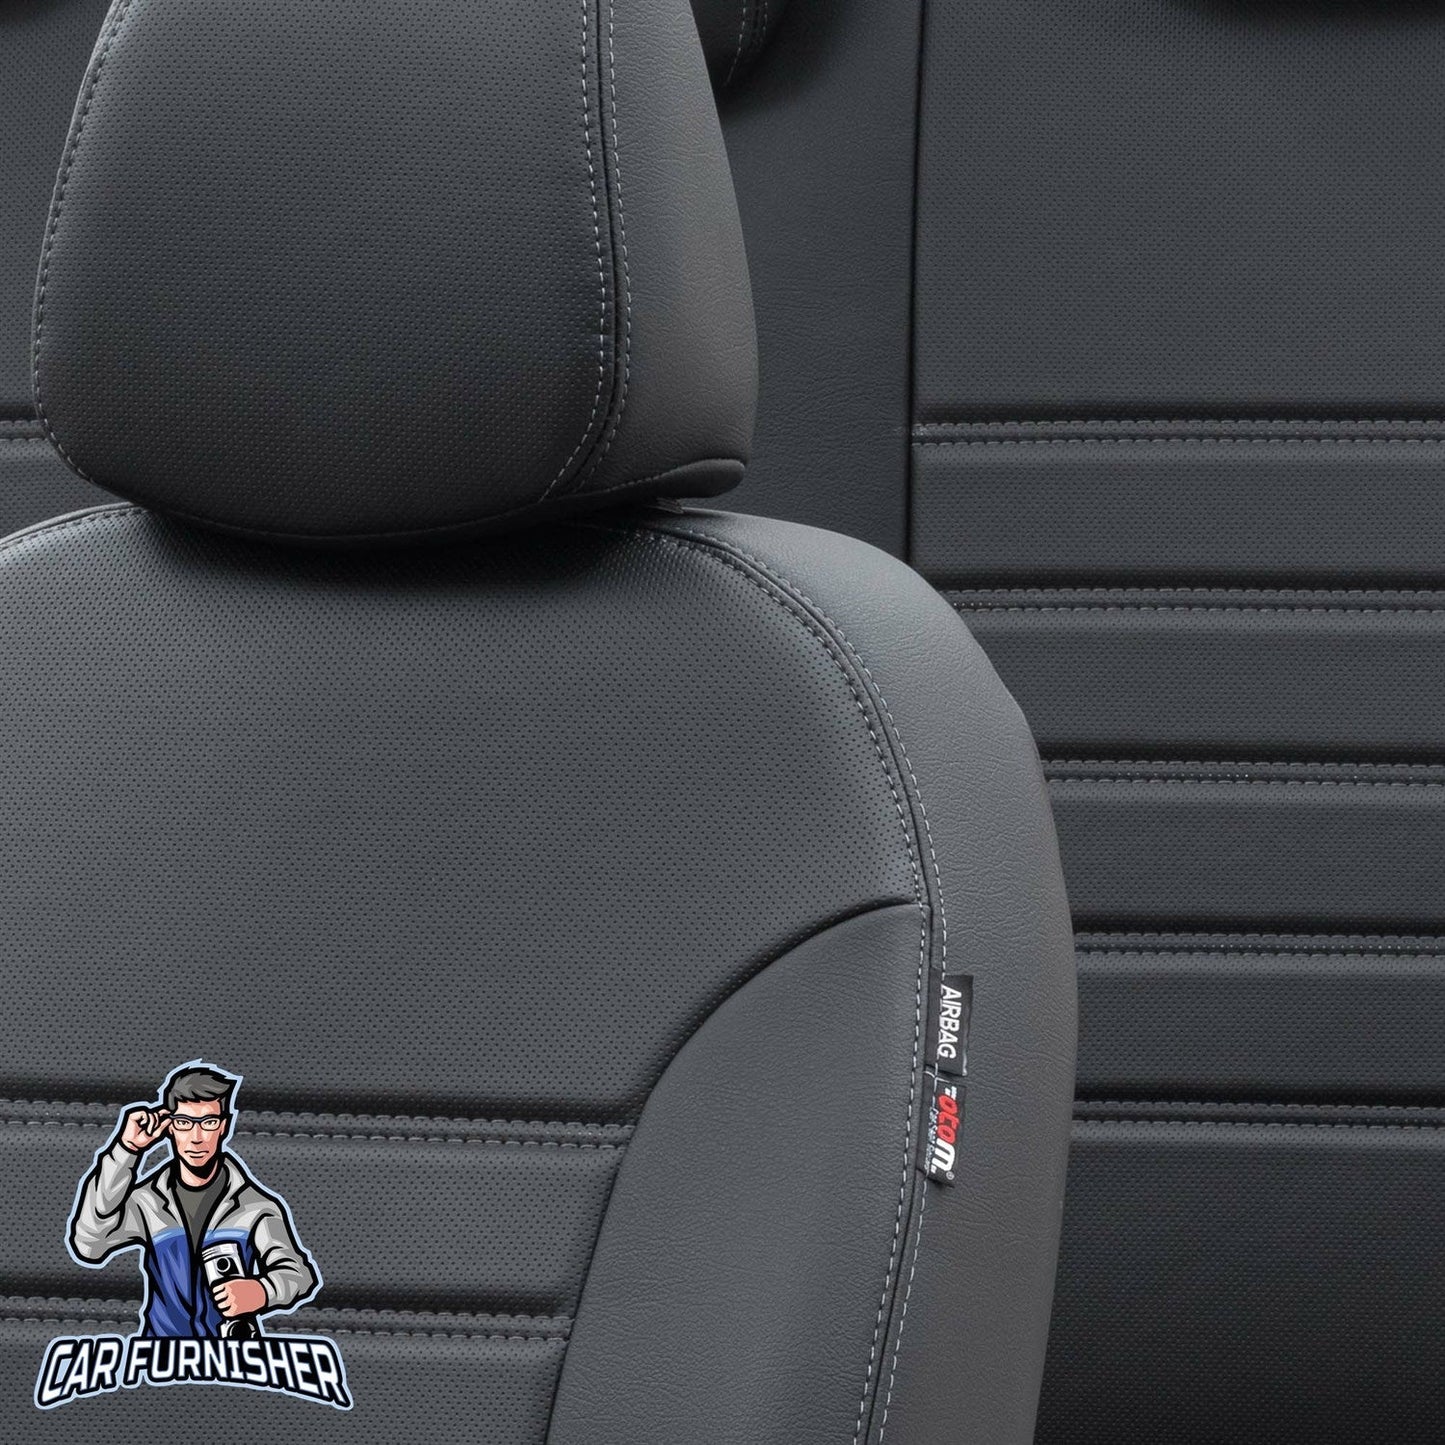 Hyundai Kona Seat Covers Istanbul Leather Design Black Leather